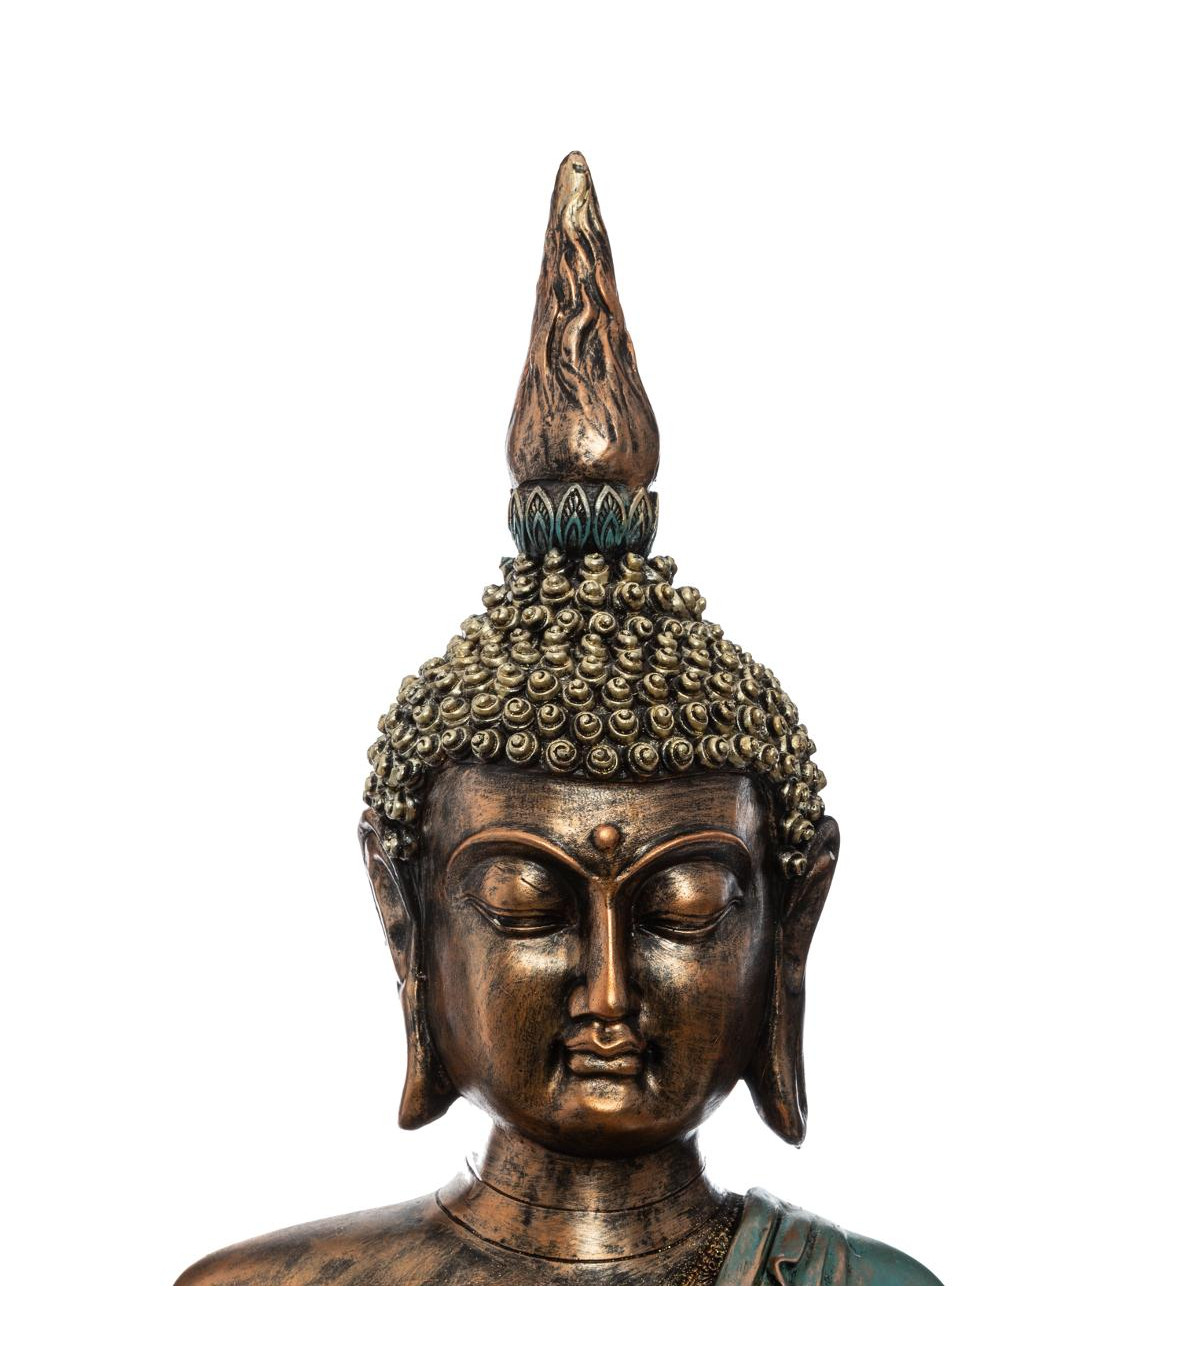 grande-statue-en-resine-bouddha-assis-h-725-cm (1)